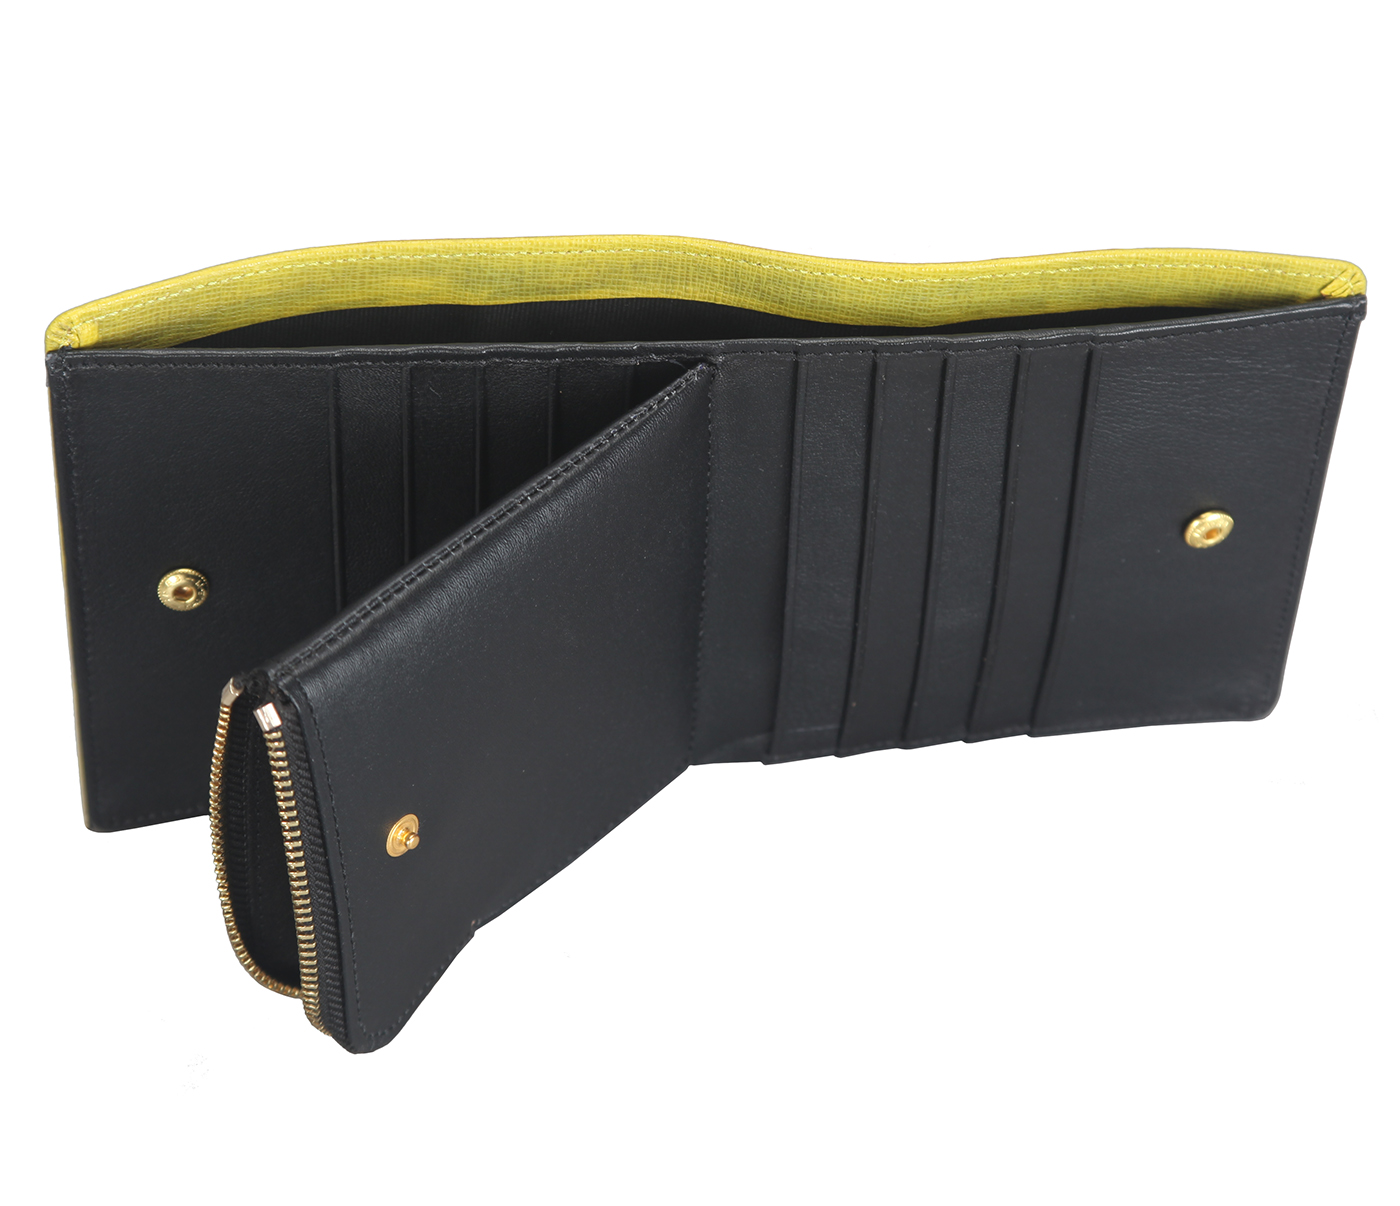 Wallet-Alabama-Women's bifold wallet in Genuine Leather - Yellow/Black